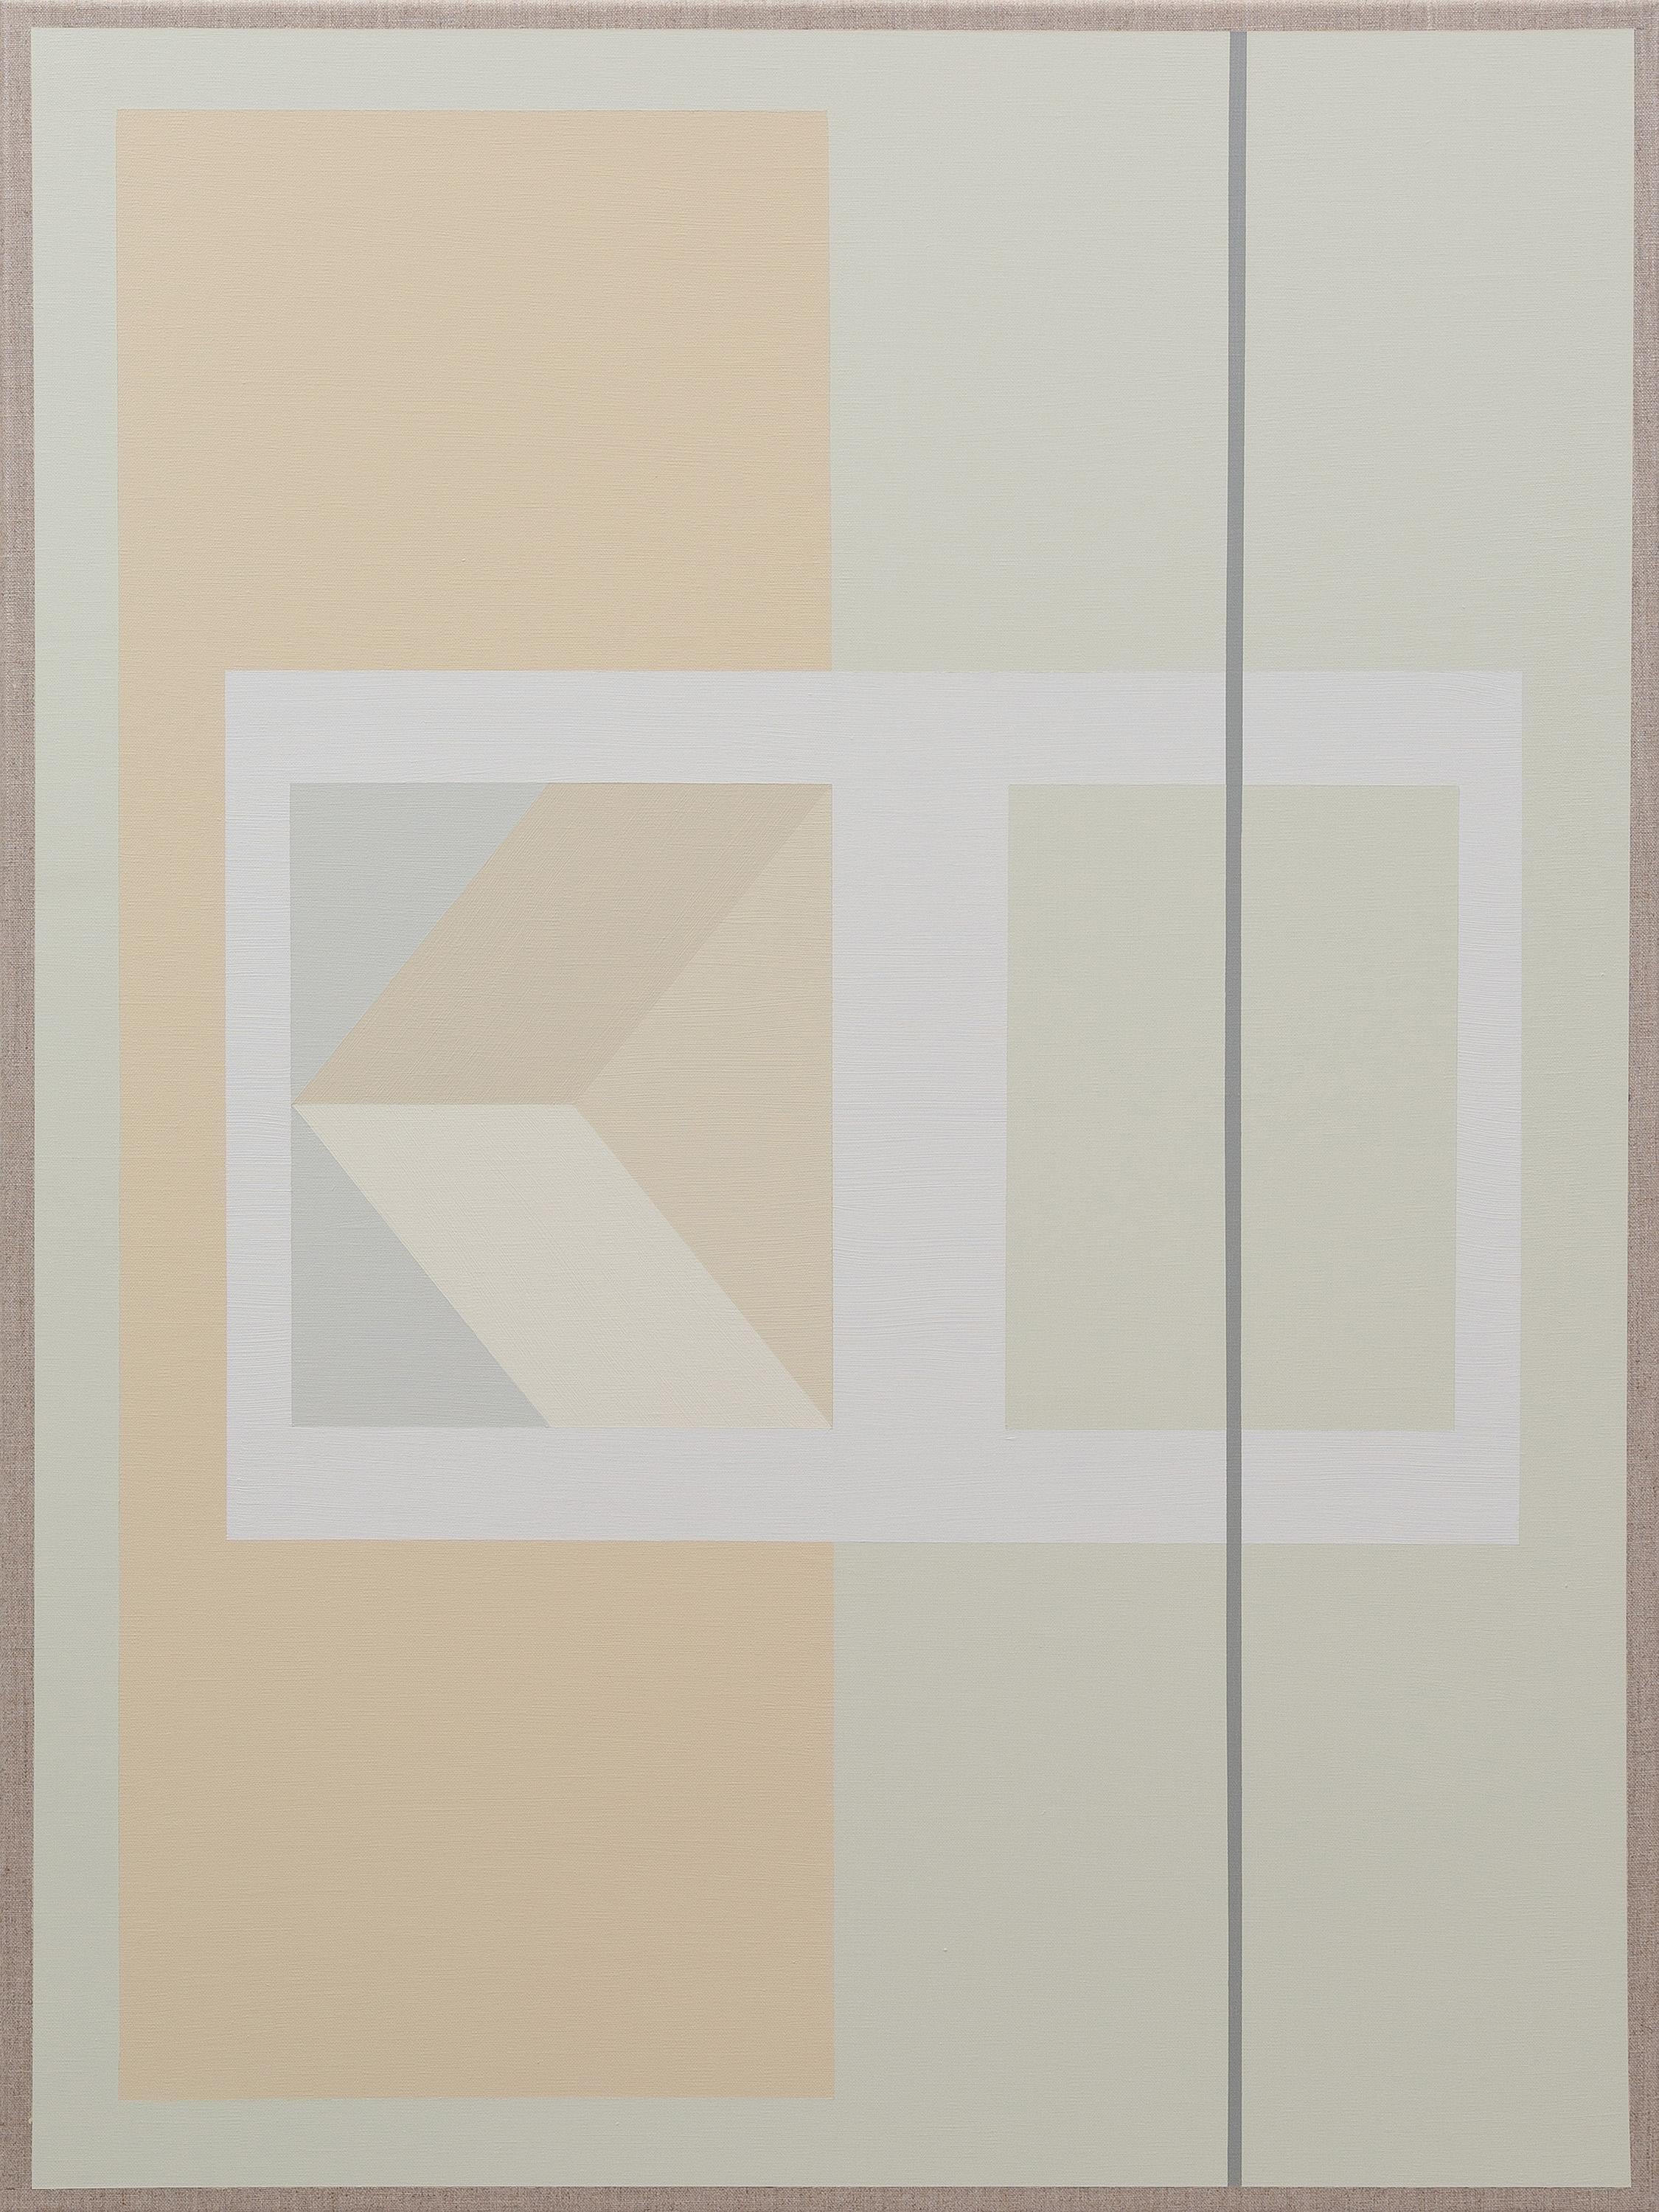 Karli Henneman Abstract Painting - K.160